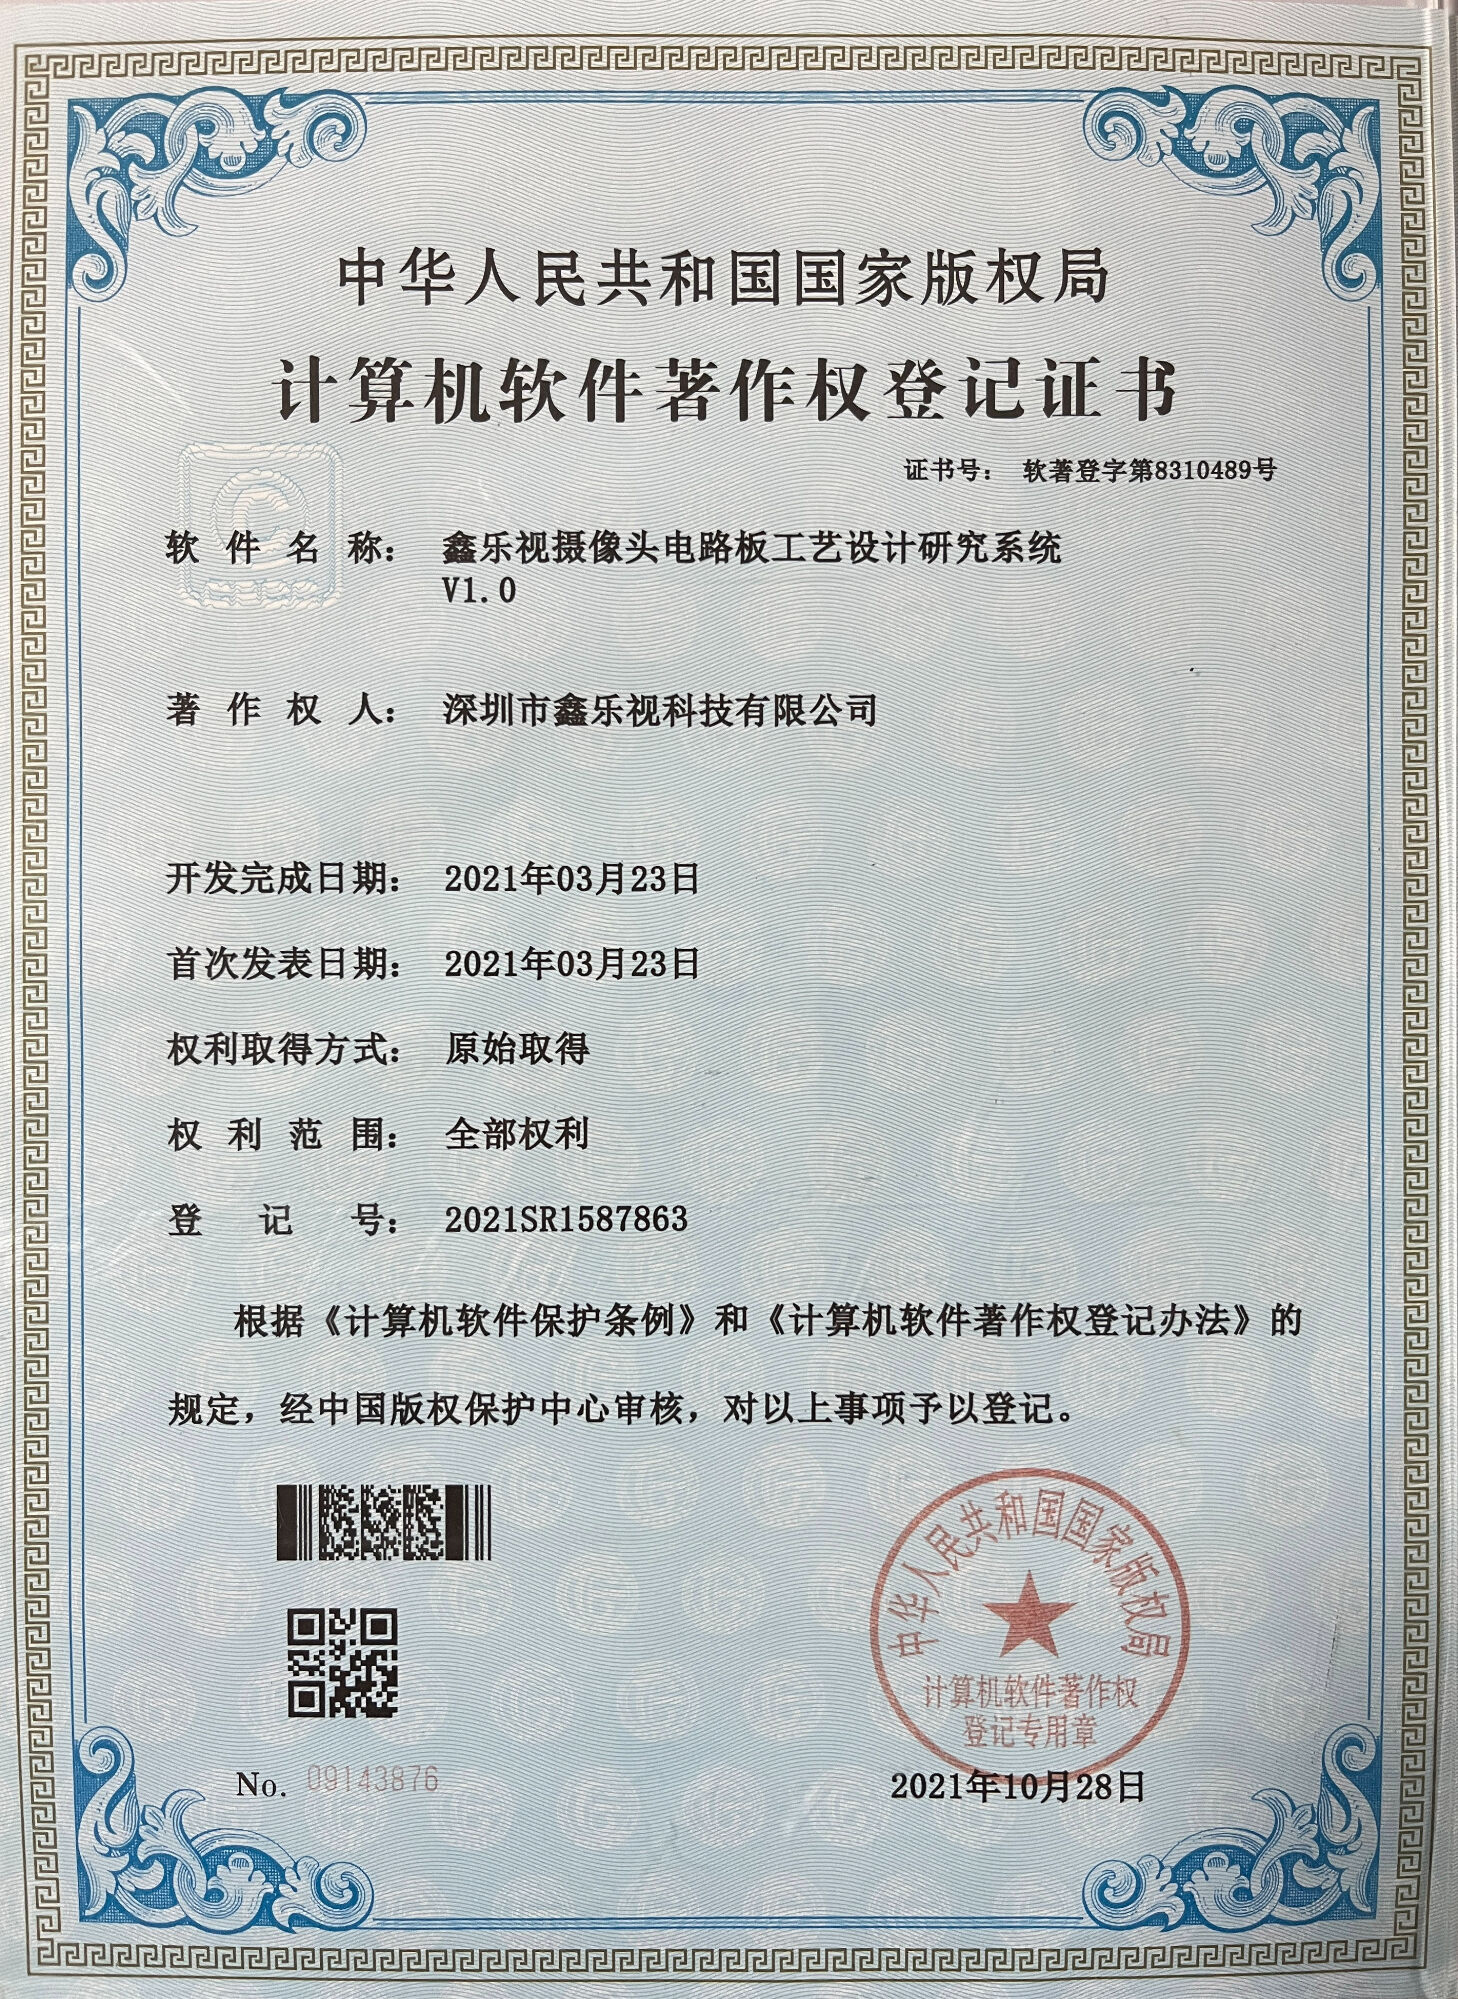 Certification12